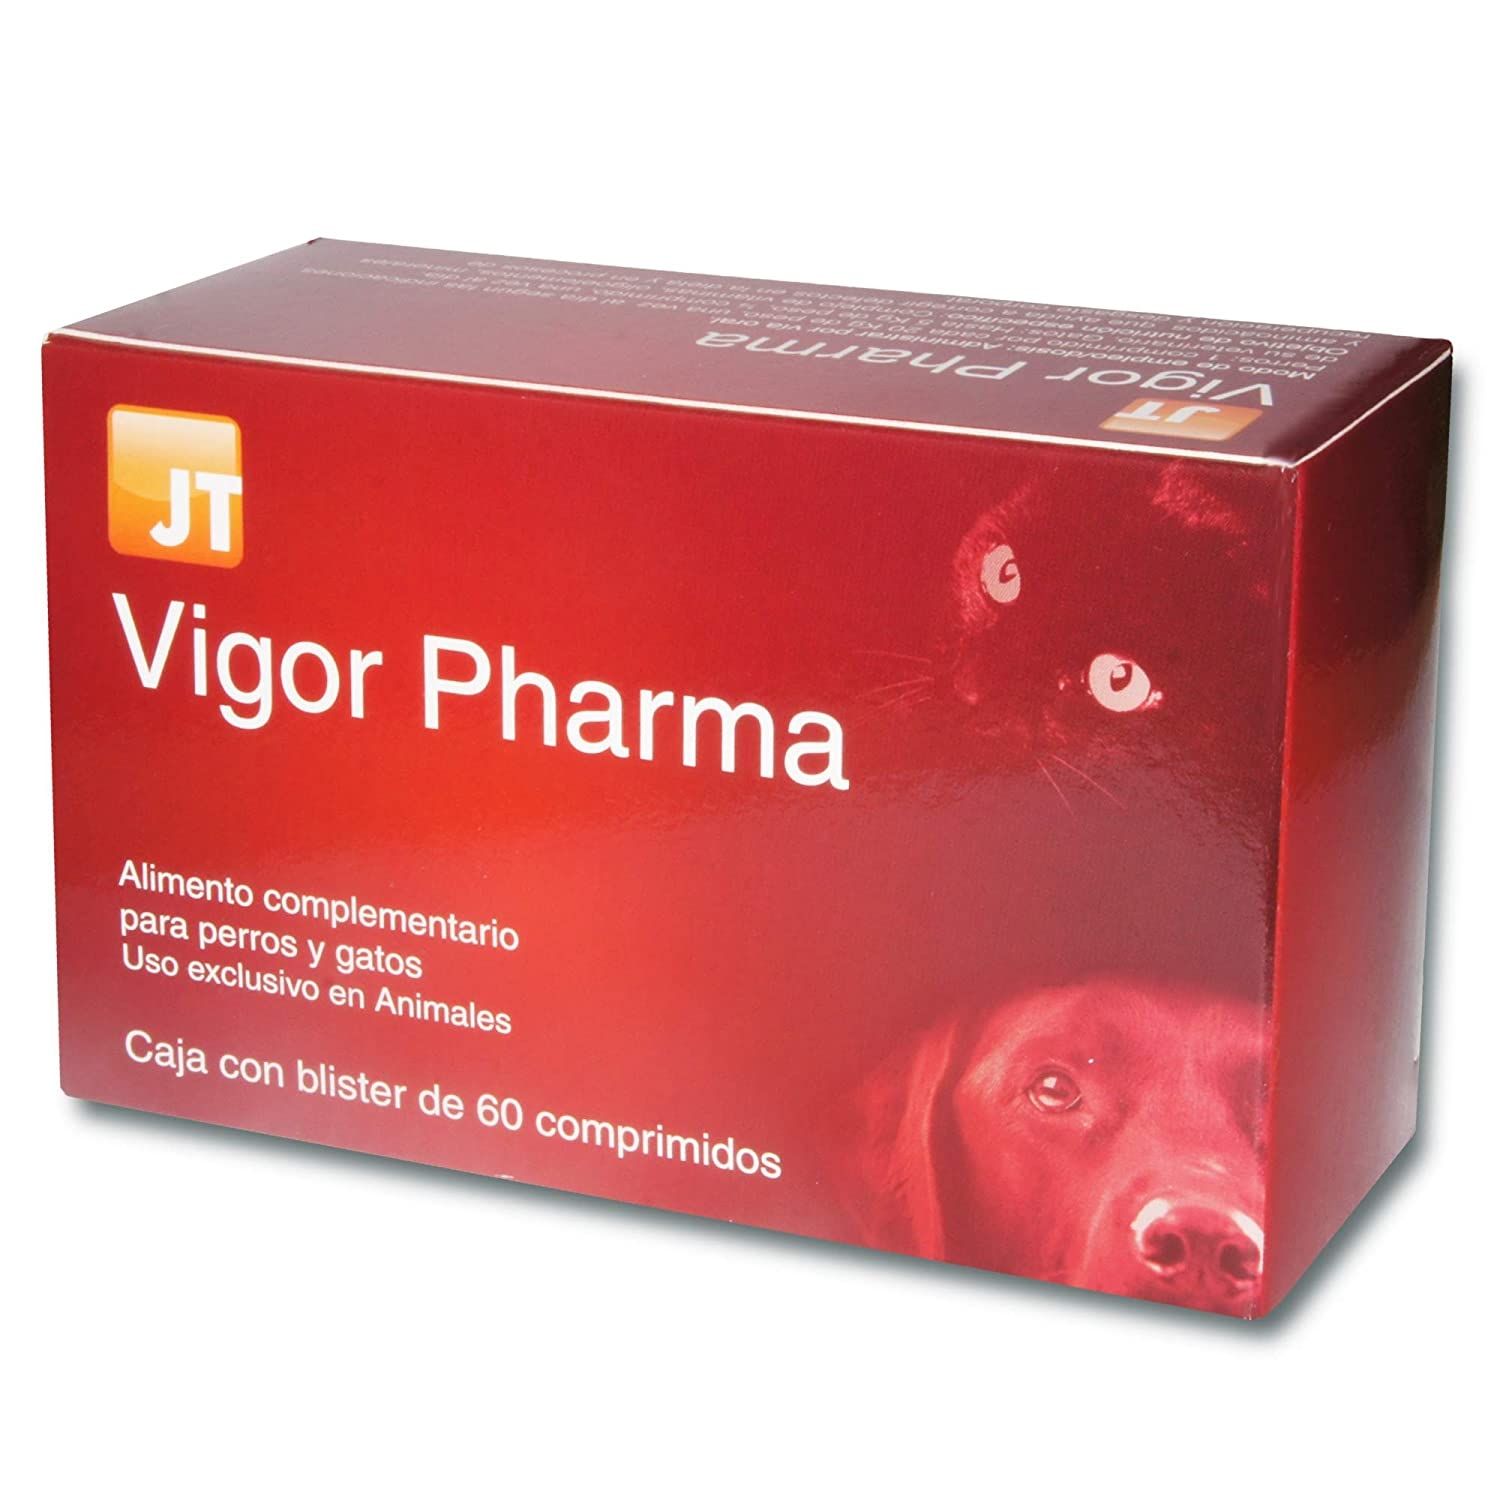 JT-Vigor Pharma, 60 tablete